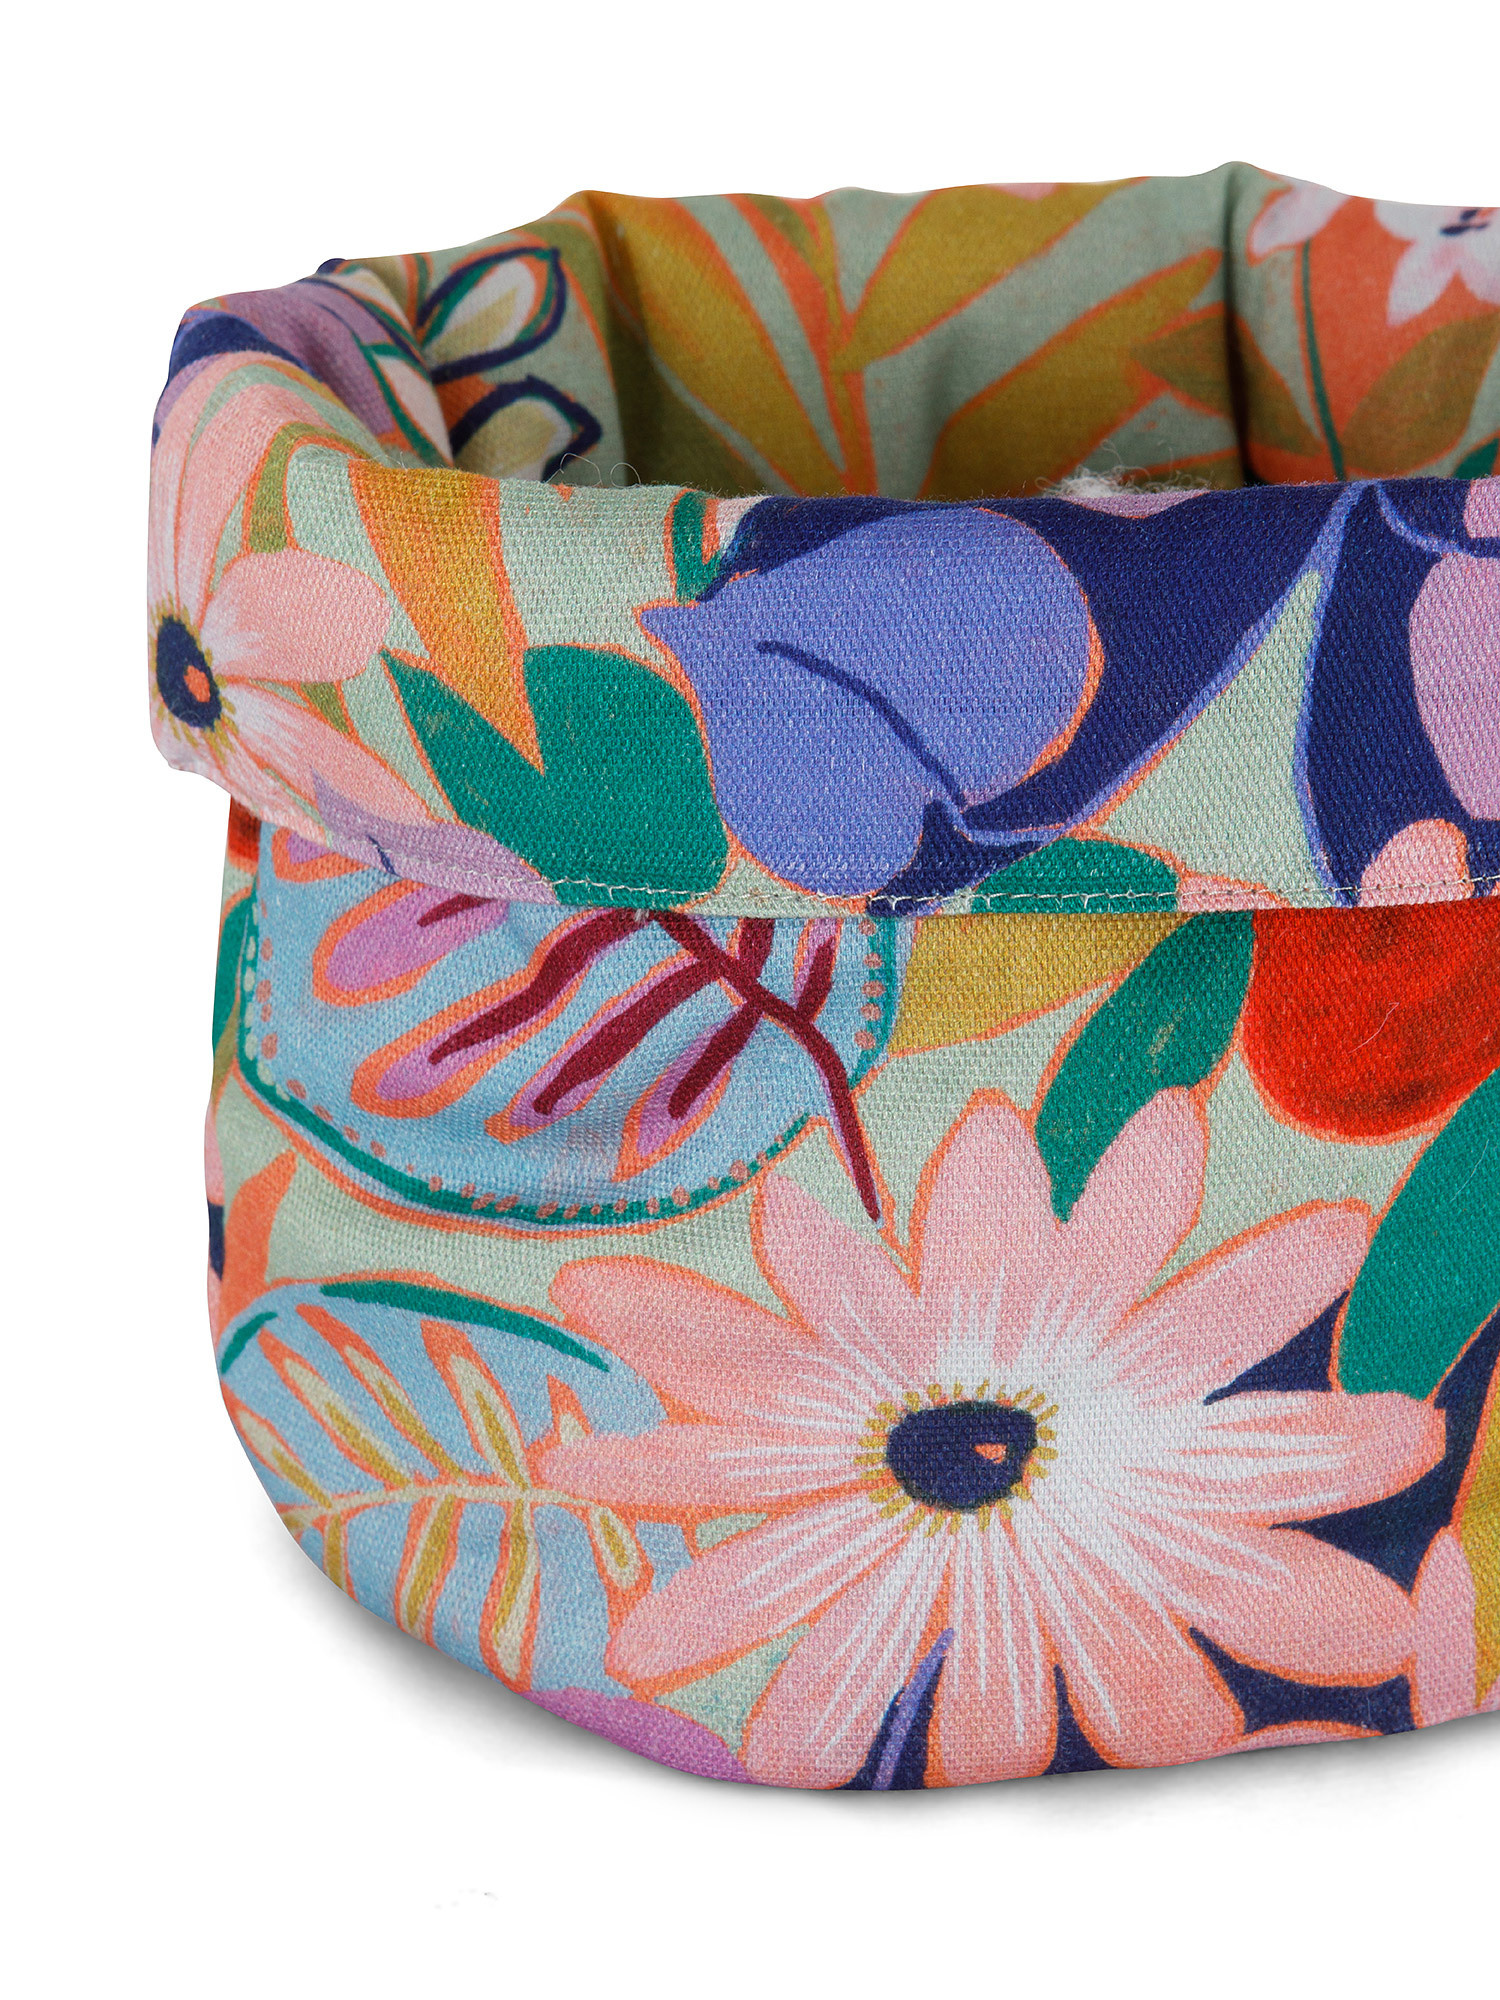 100% cotton basket with floral print, Multicolor, large image number 1